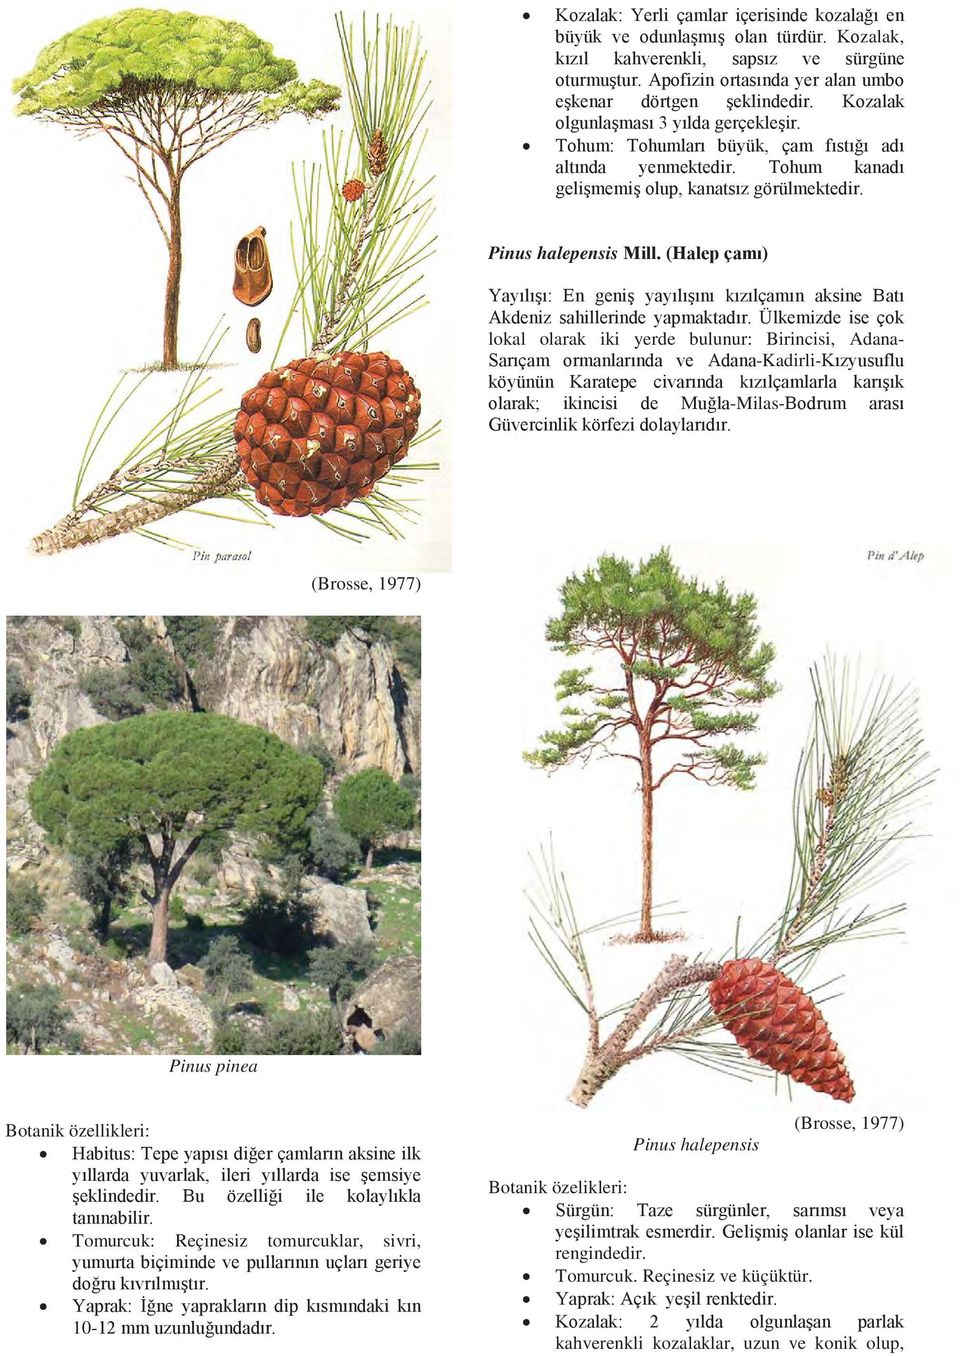 tomurcuklar, sivri, 10- Pinus halepensis (Brosse, 1977) Botanik özelikleri: